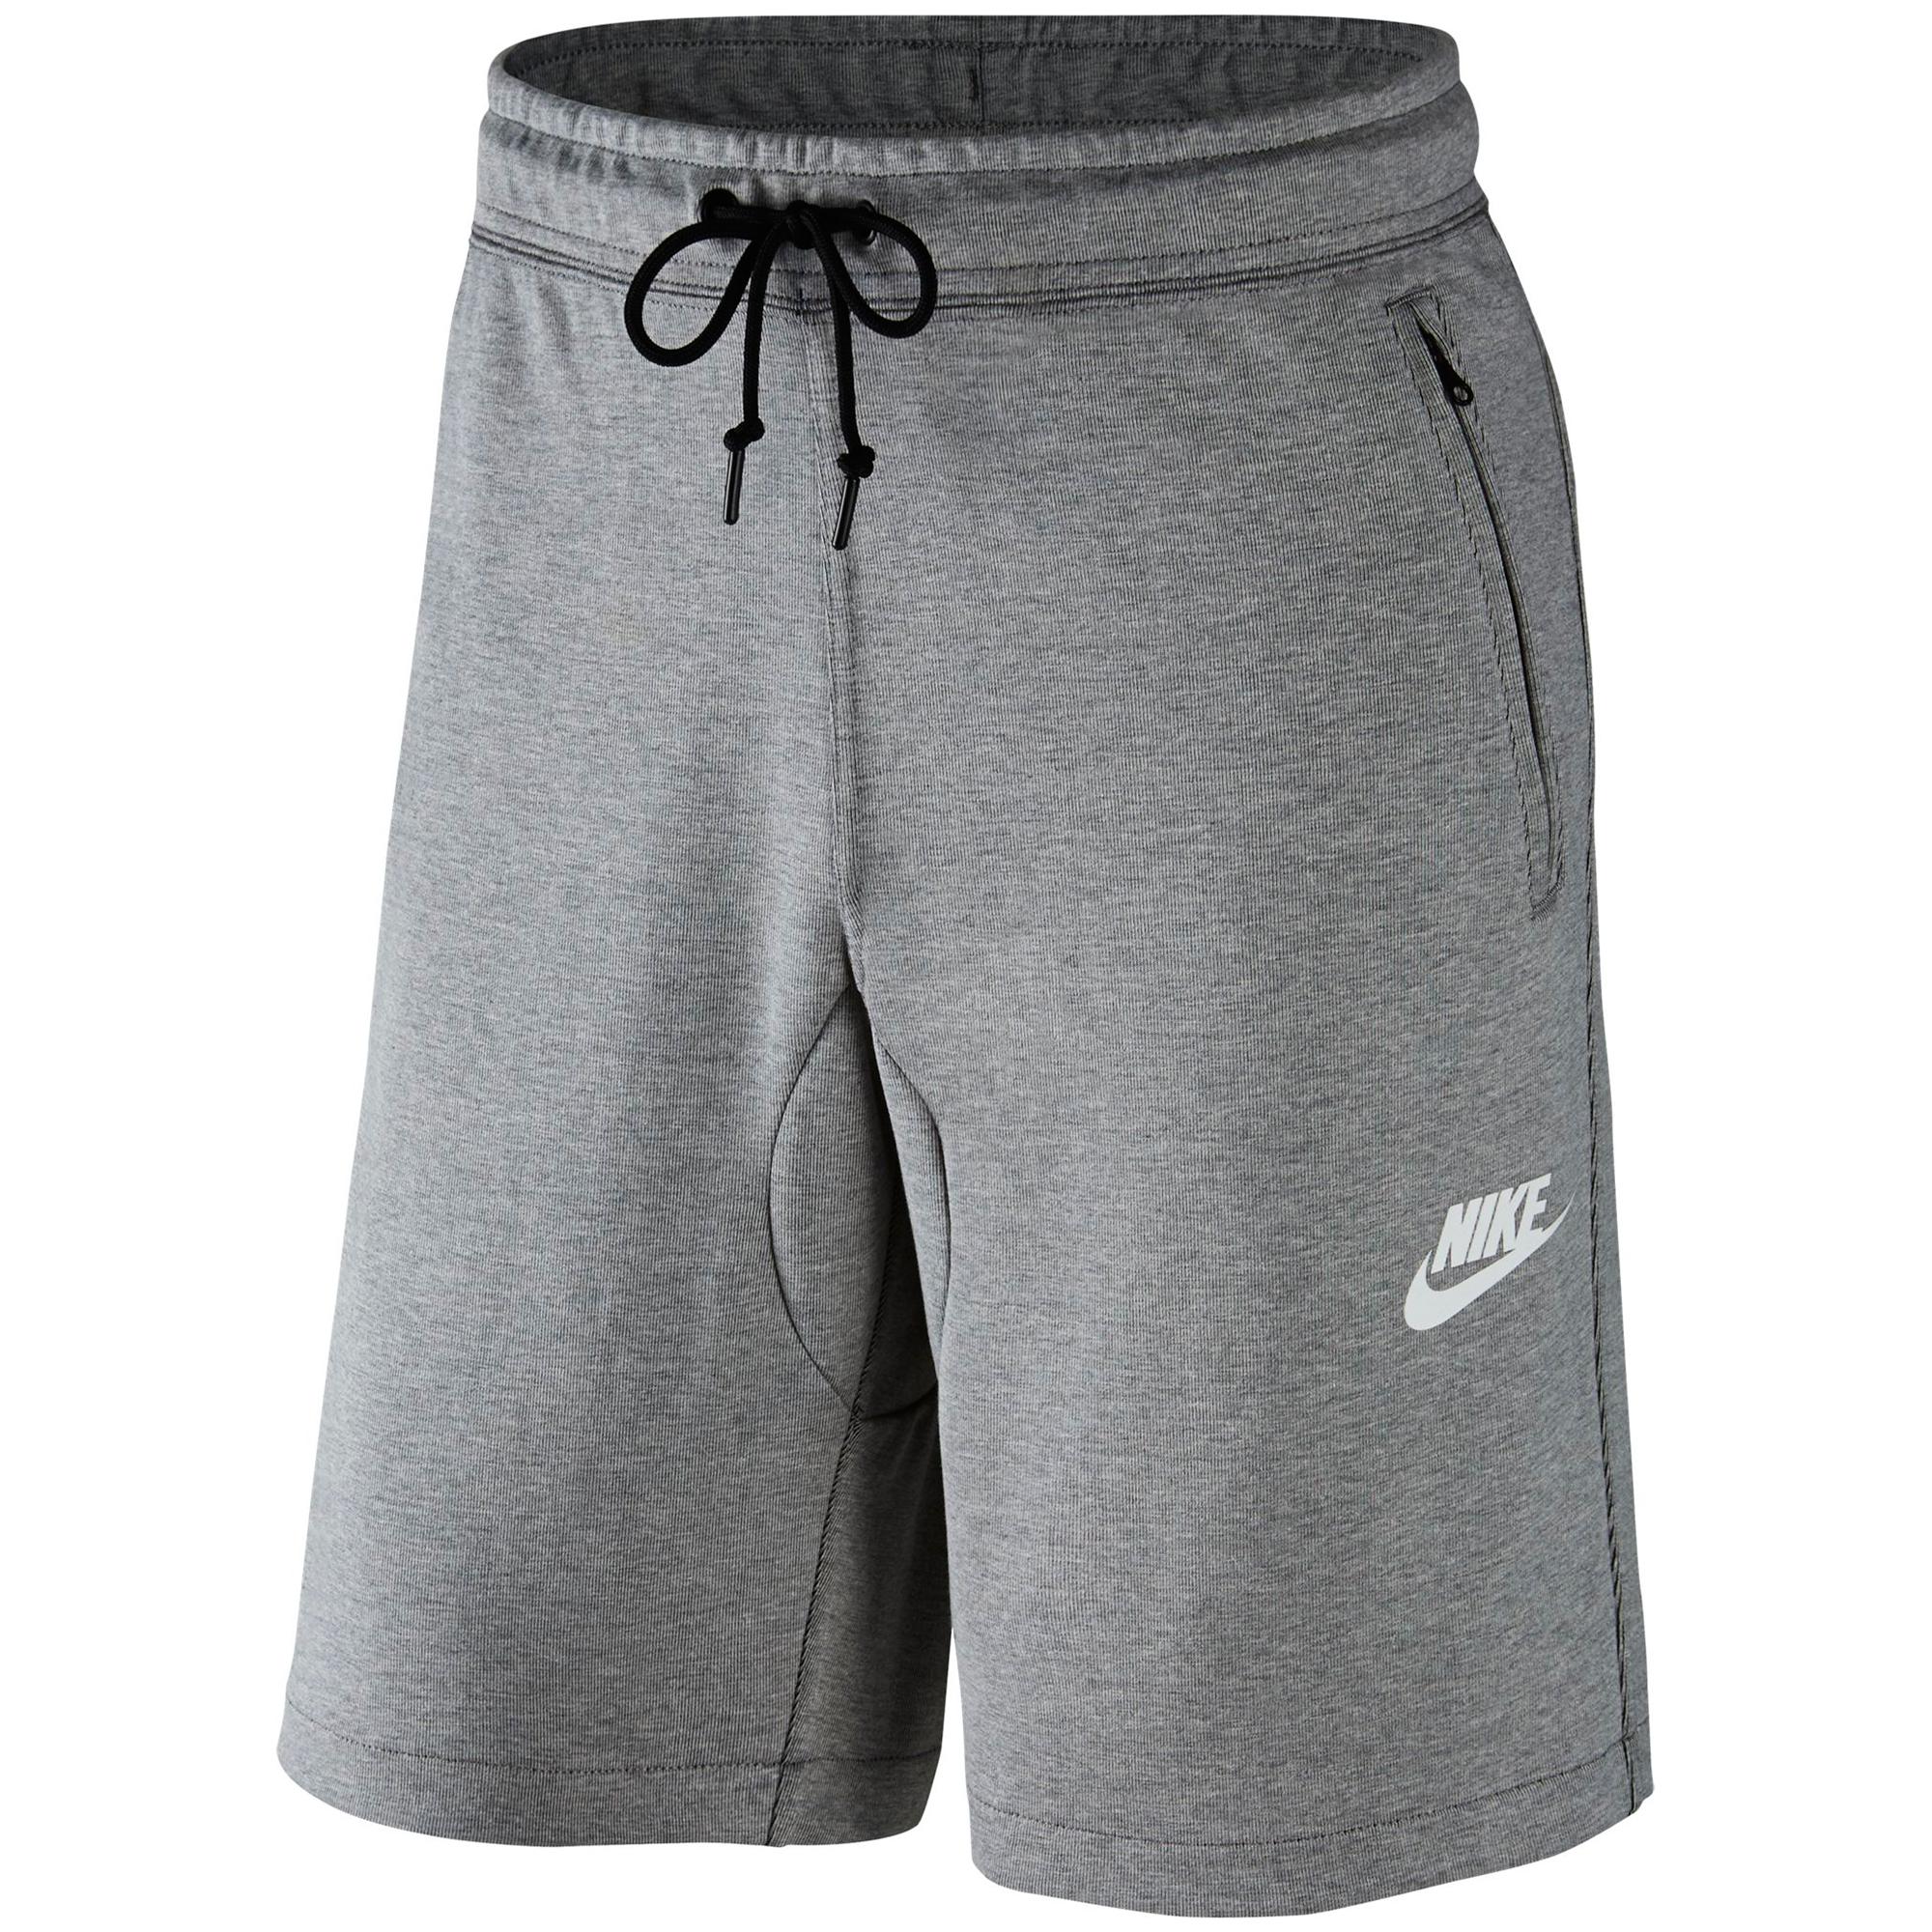 Nike Mens Sportswear Advance 15 Shorts - Dark Grey Heather - Tennisnuts.com